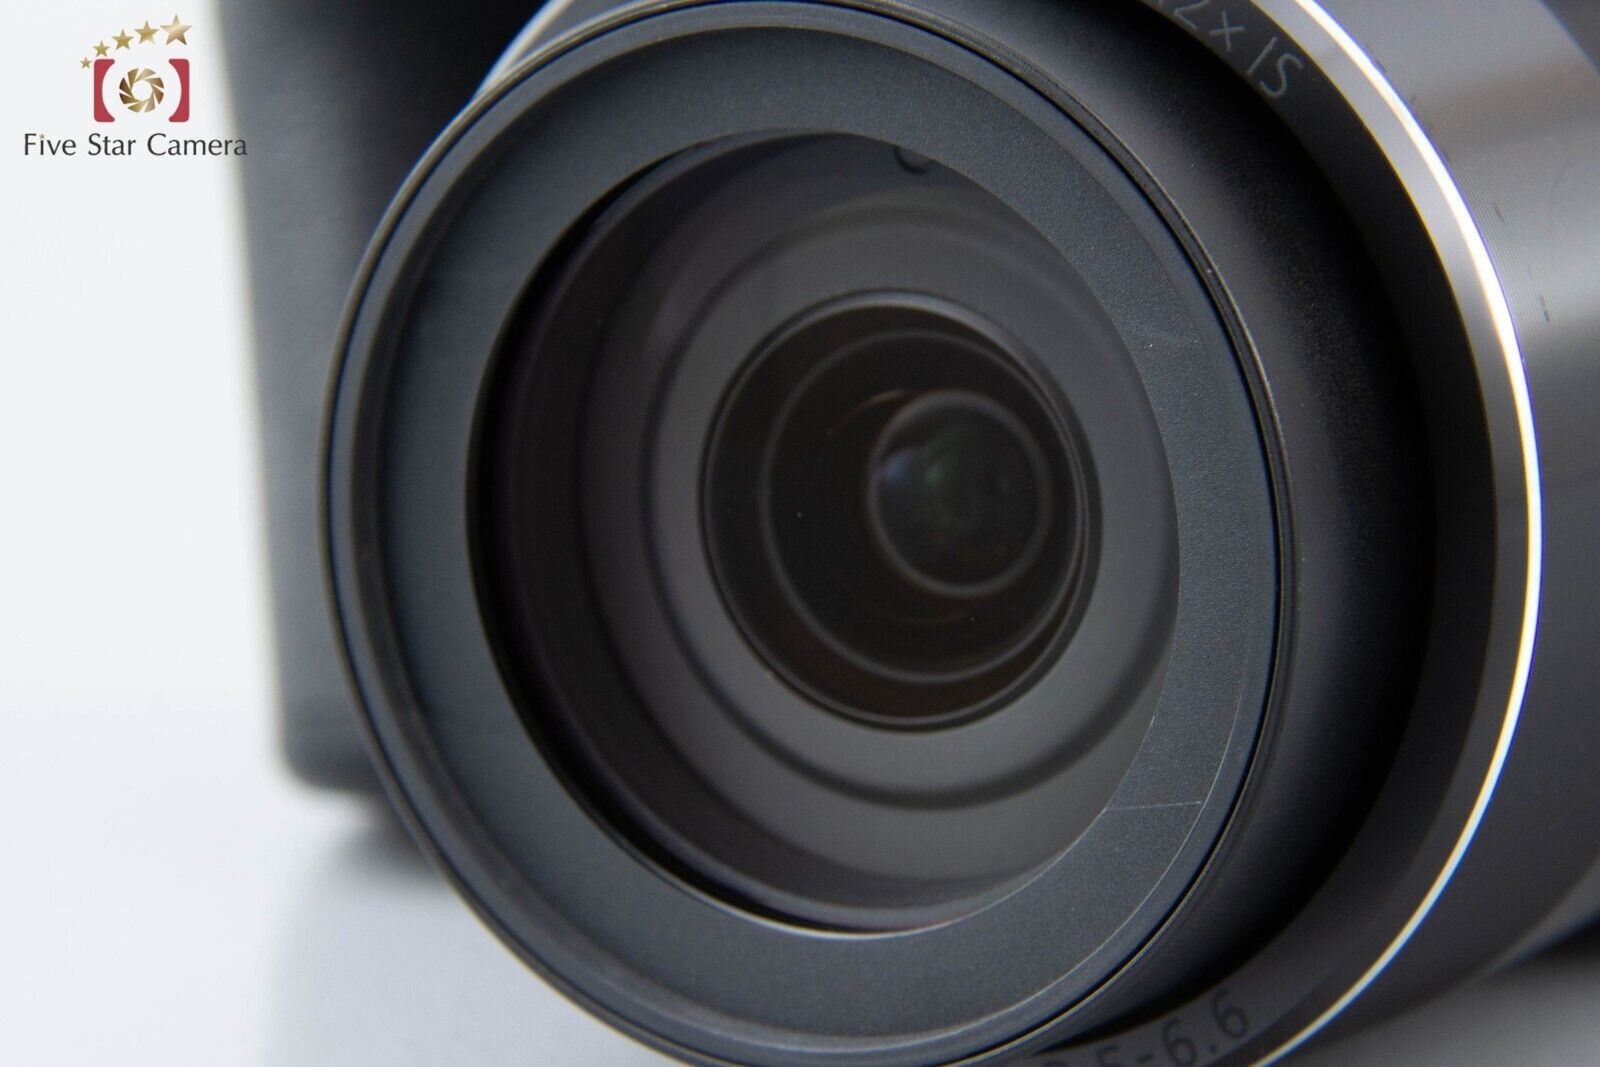 Canon PowerShot SX420 IS Black 20.0 MP Digital Camera